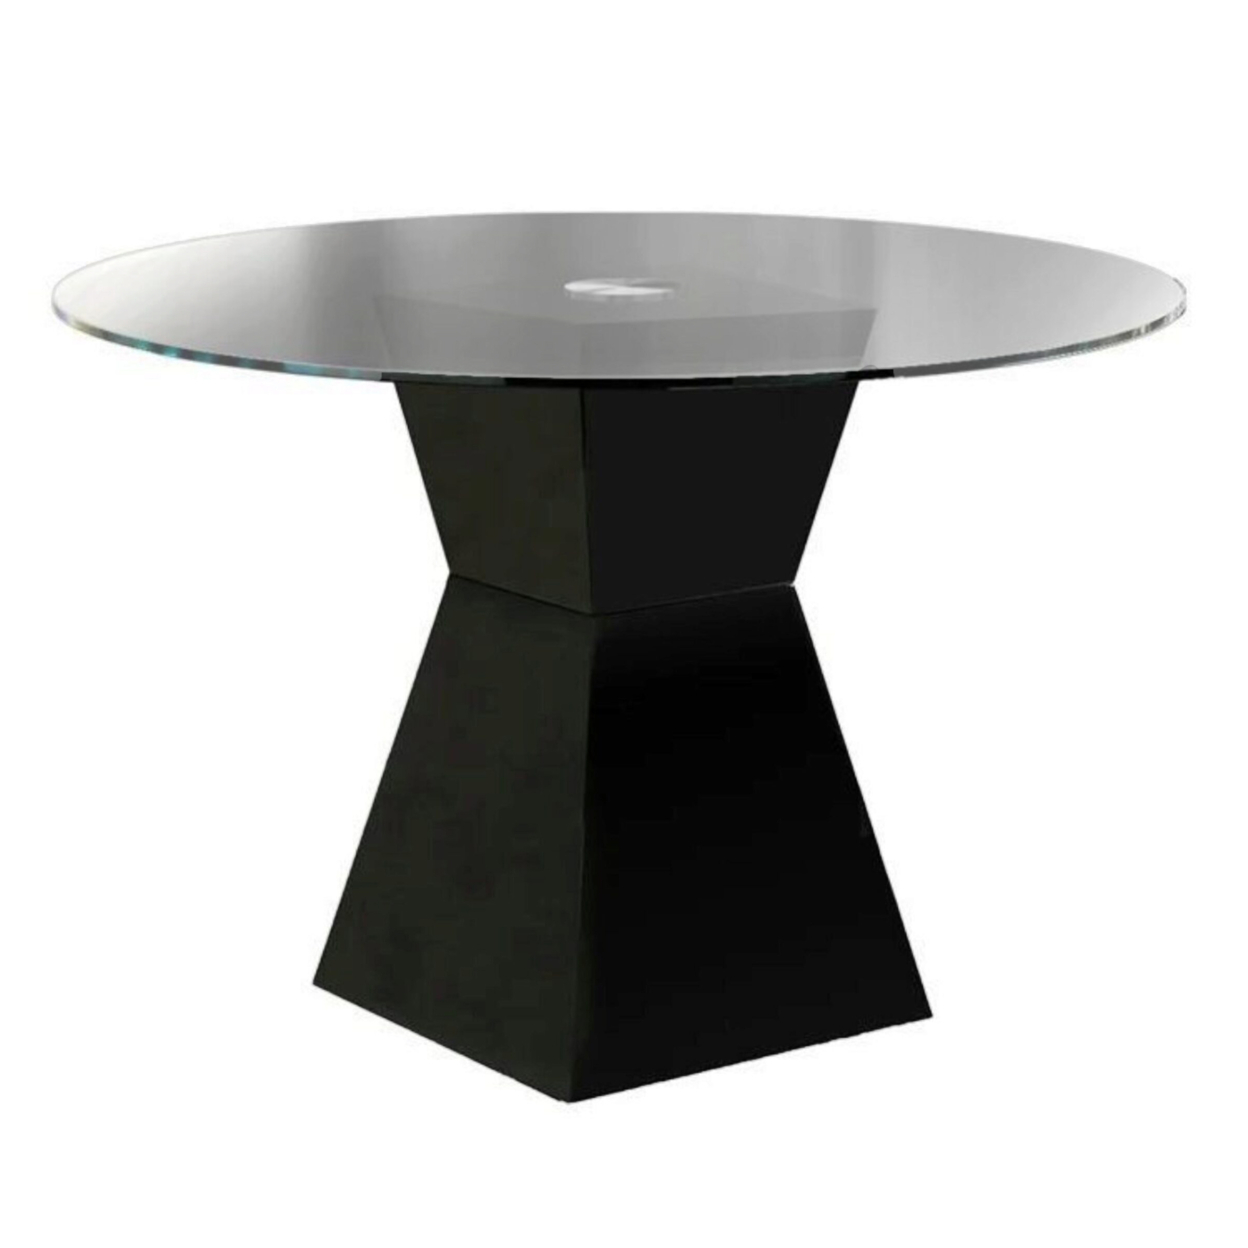 Saltoro Sherpi Contemporary Round Glass Dining Table with Square Pedestal Base, Black - Saltoro Sherpi